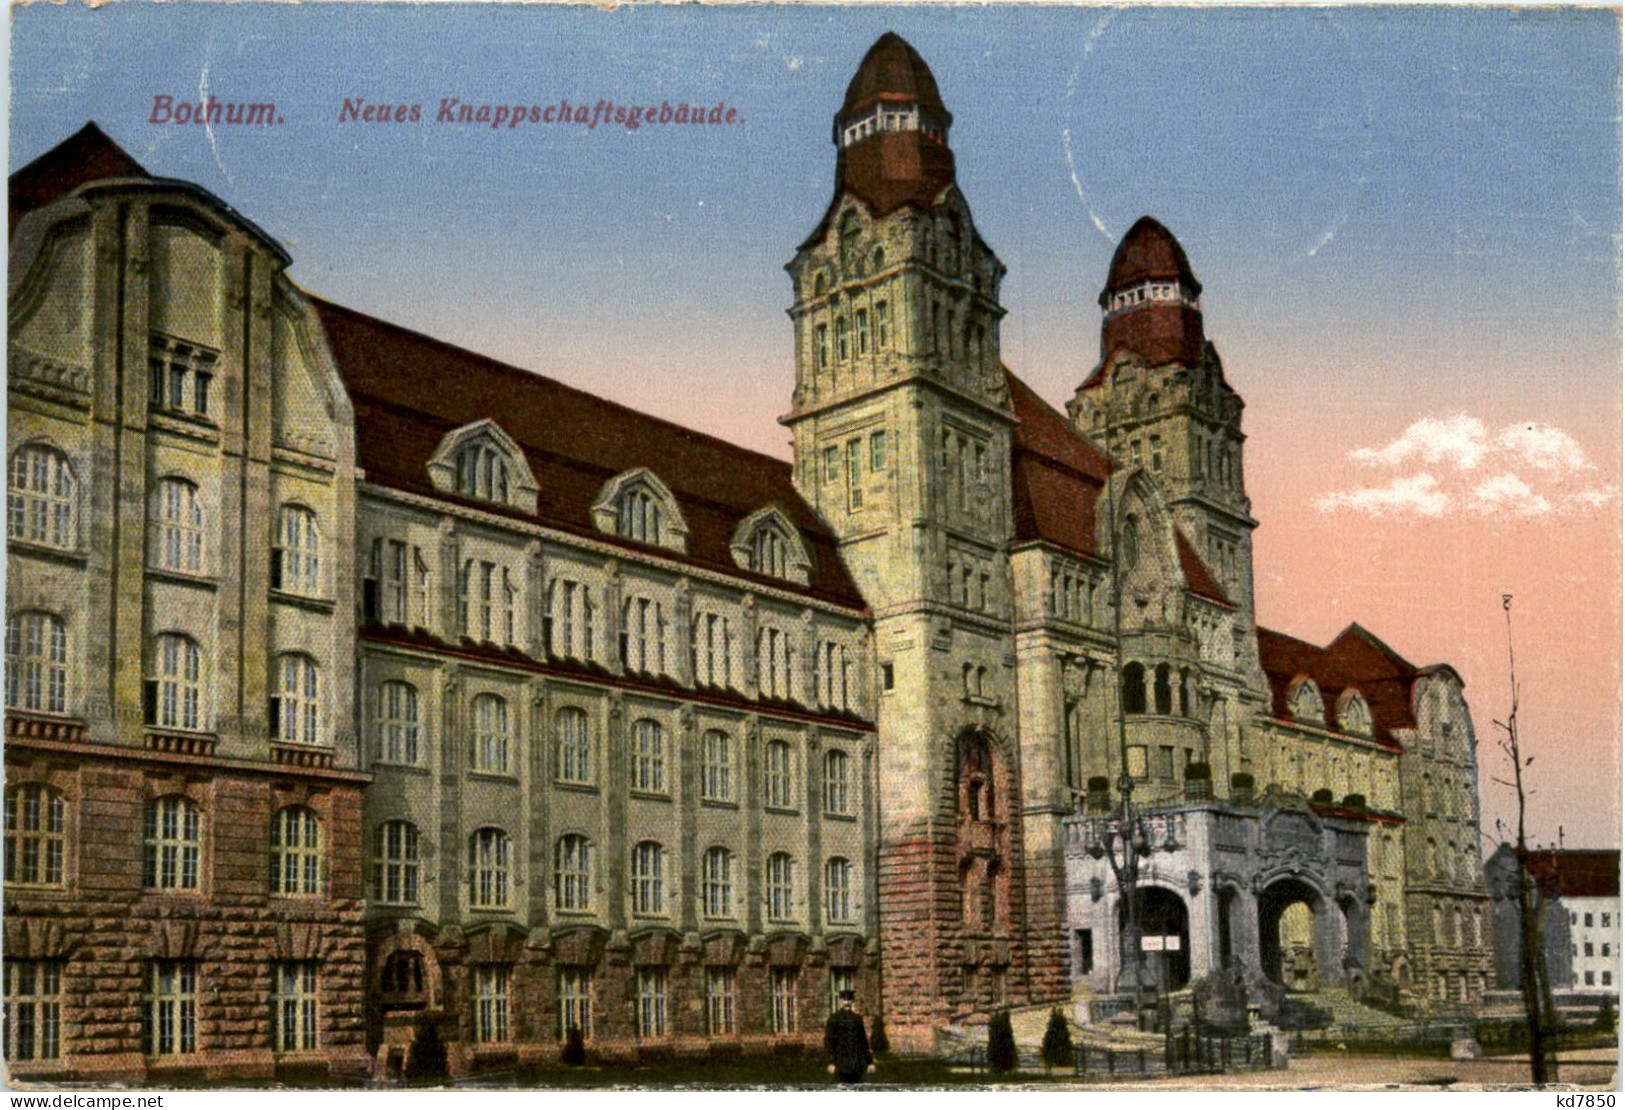 Bochum, Neues Knappschaftsgebäude - Bochum